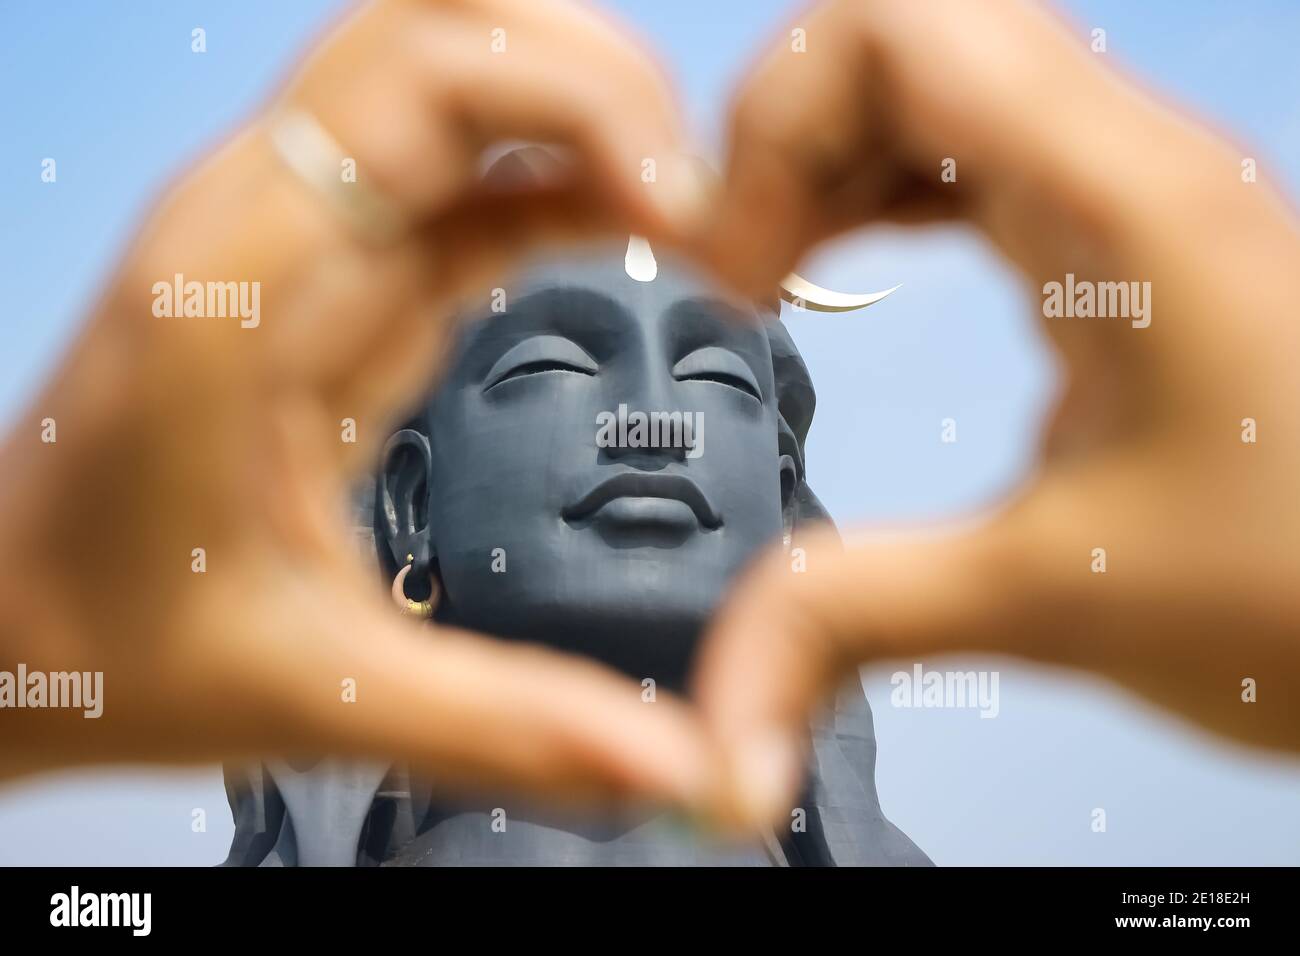 Adiyogi Lord Shiva Statue in Isha Yoga Coimbatore, Tamilnadu, India. Lord Siva Statue. Stock Photo